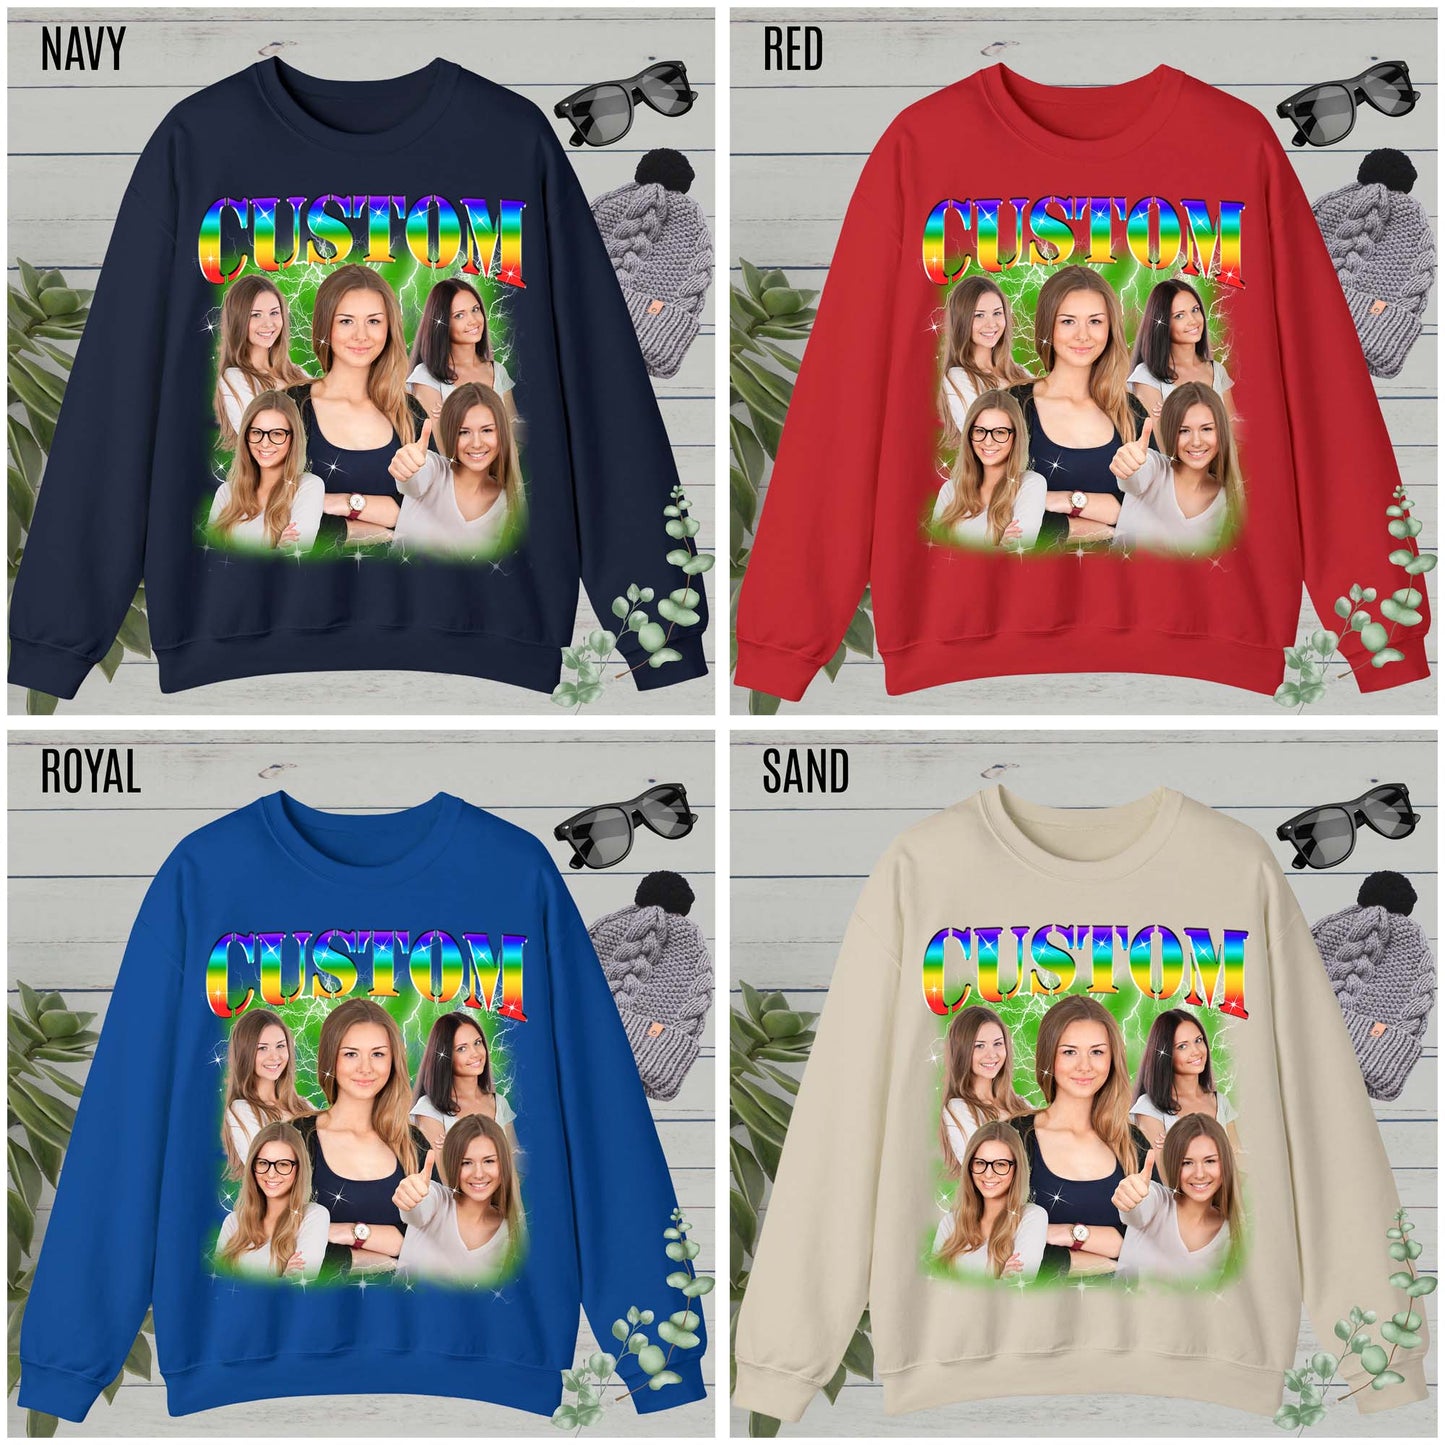 Custom Photo Bootleg Girlfriend Rainbow 90s Retro Vintage Sweatshirt, Face for Boyfriend Birthday Gift on Sweatshirt, Bootleg Tee, S1523